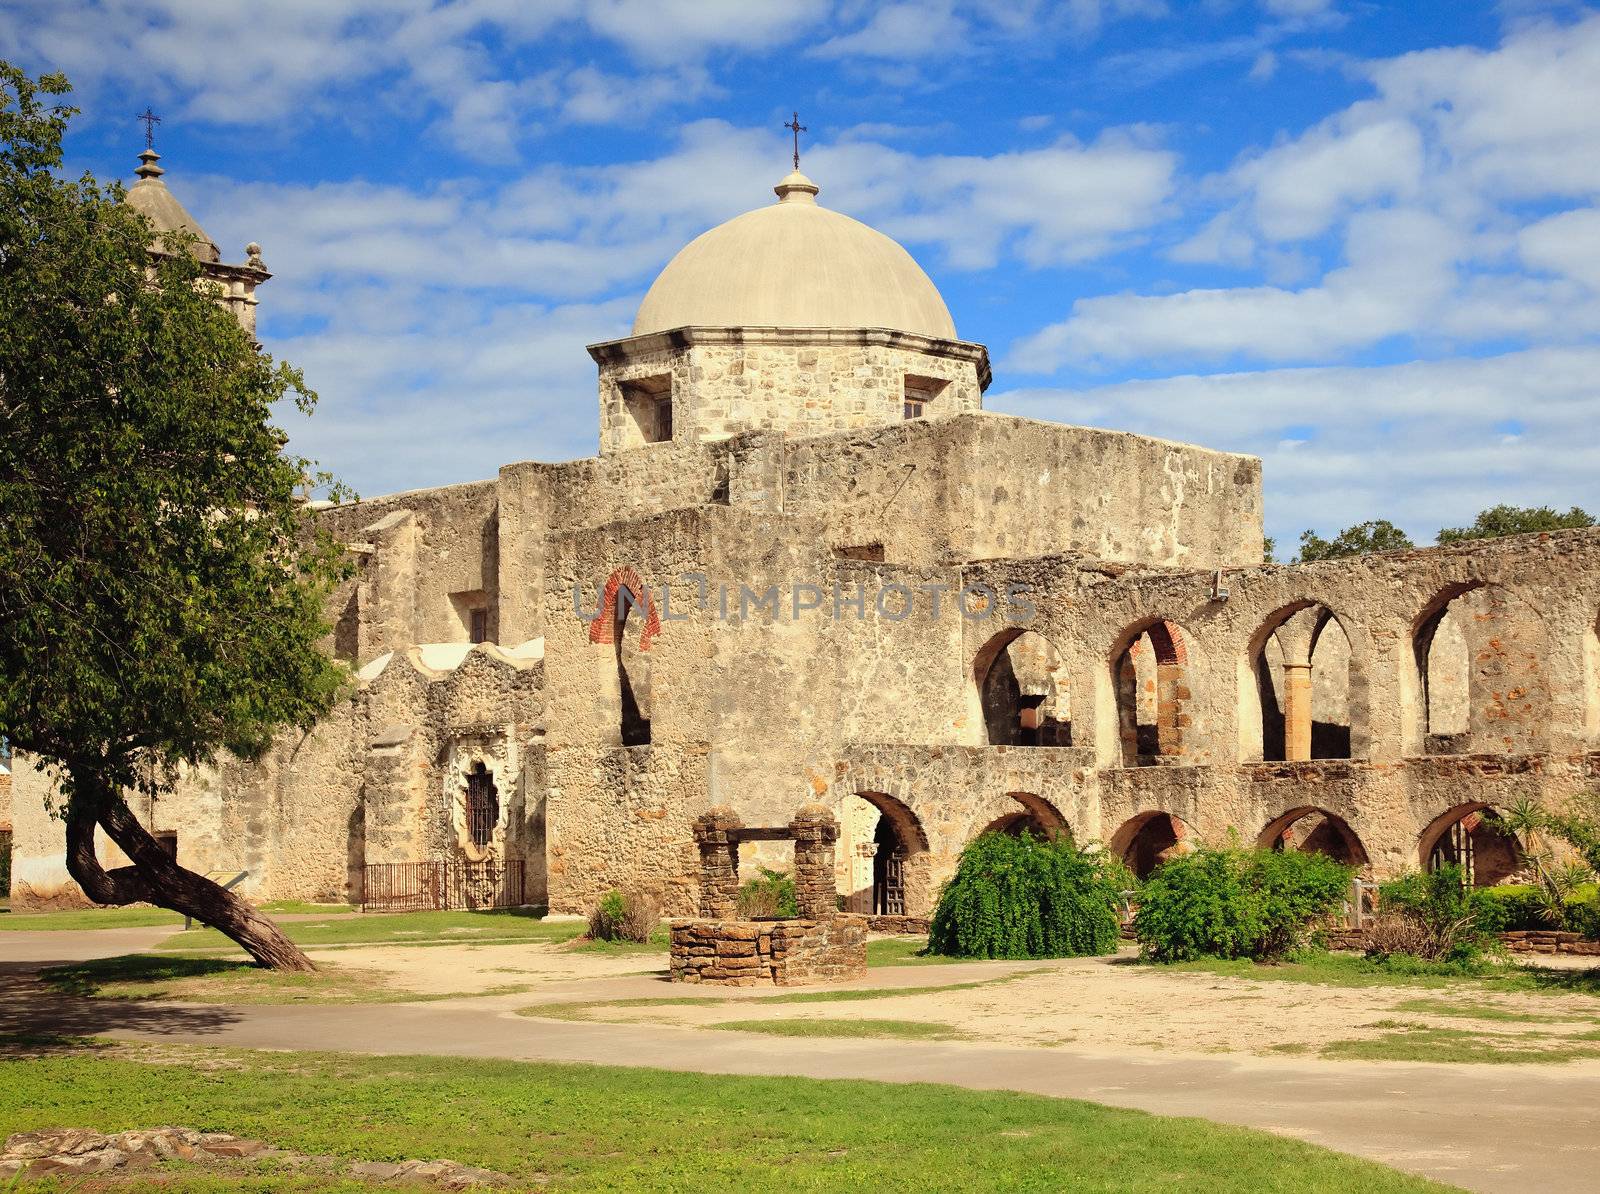 San Juan Mission in Texas by steheap